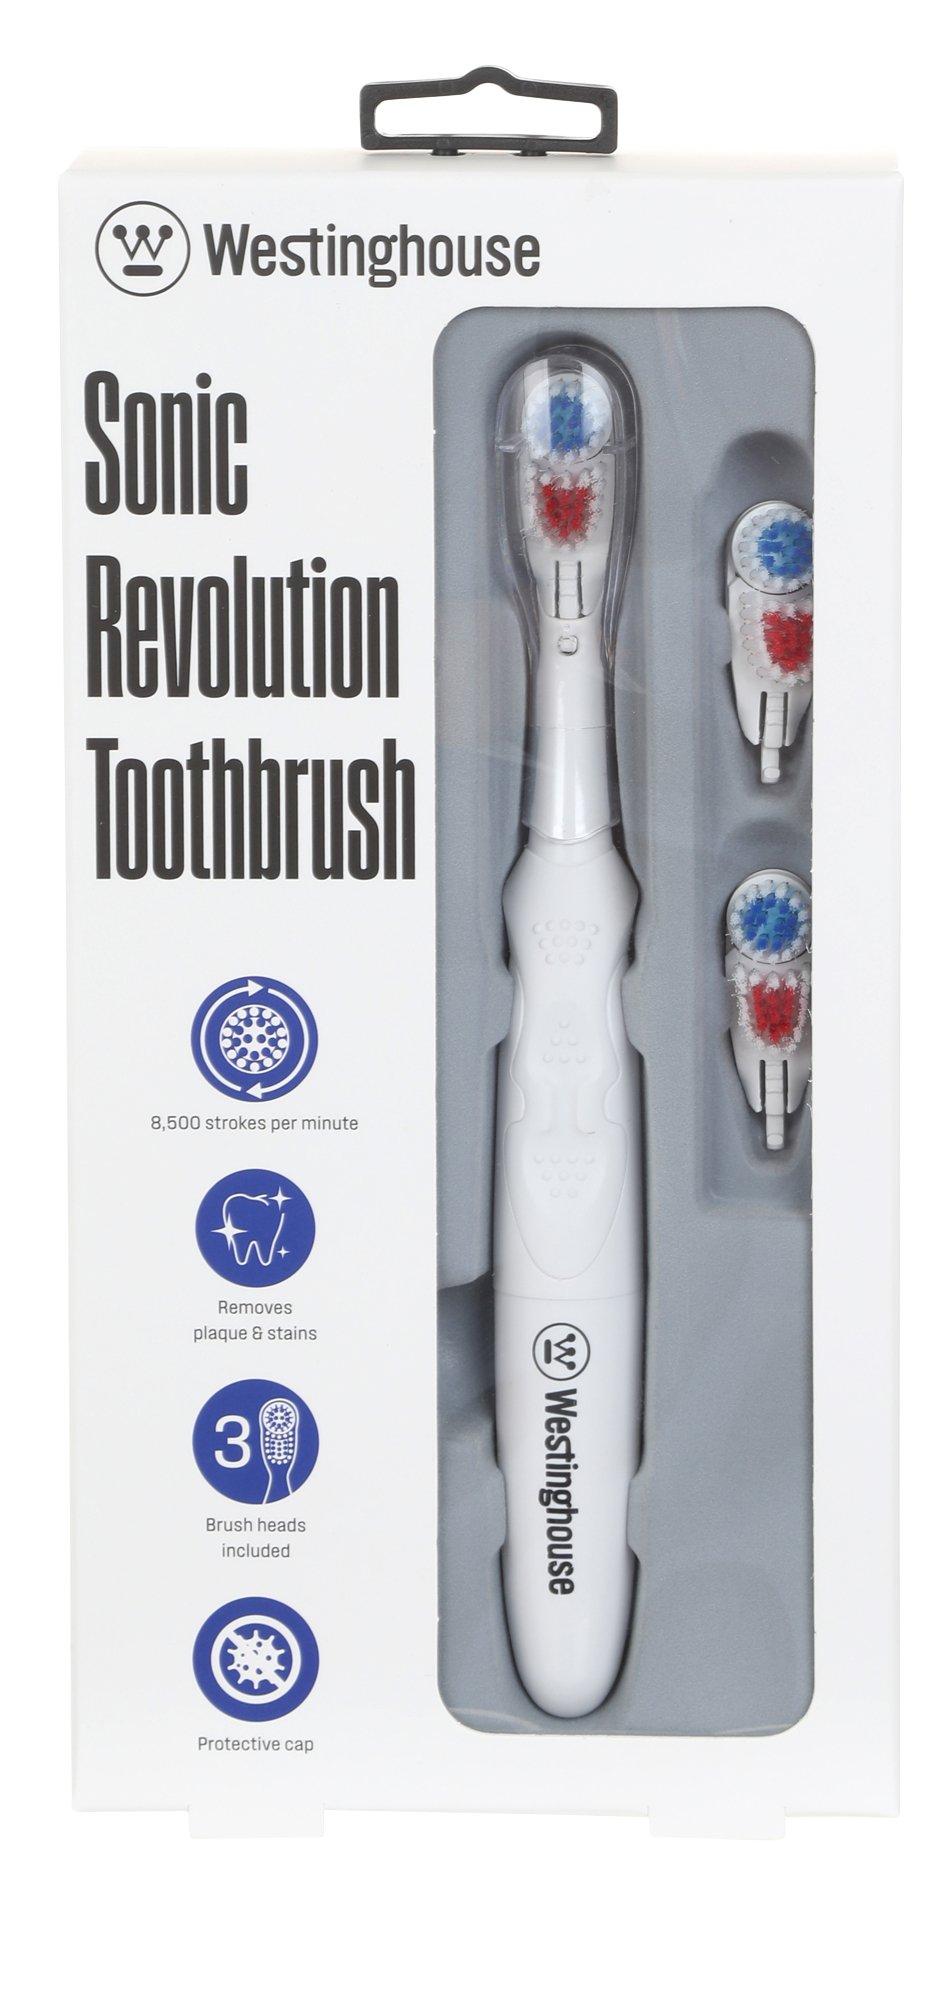 Sonic Revolution Toothbrush